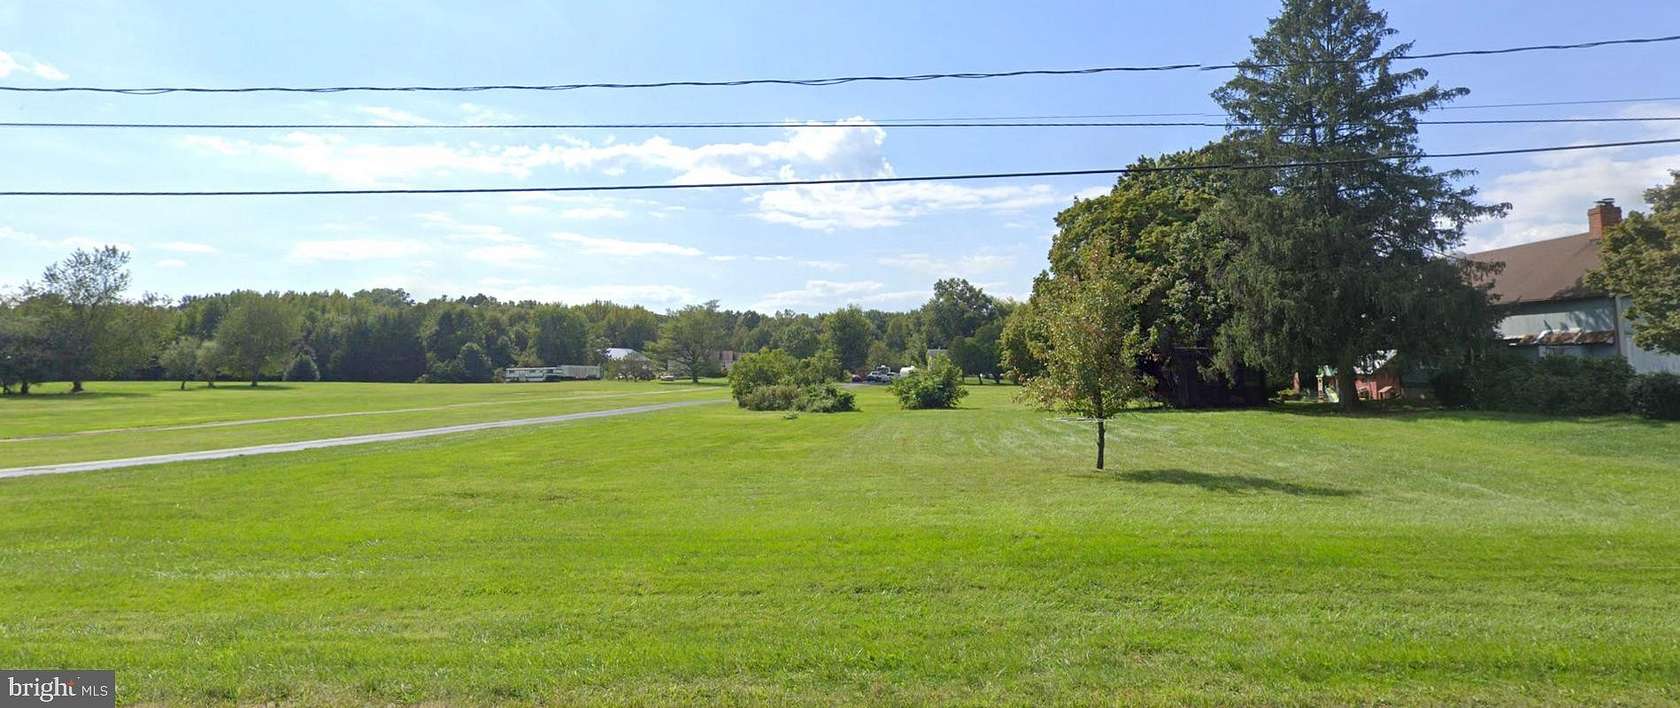 1.55 Acres of Residential Land for Sale in Bear, Delaware